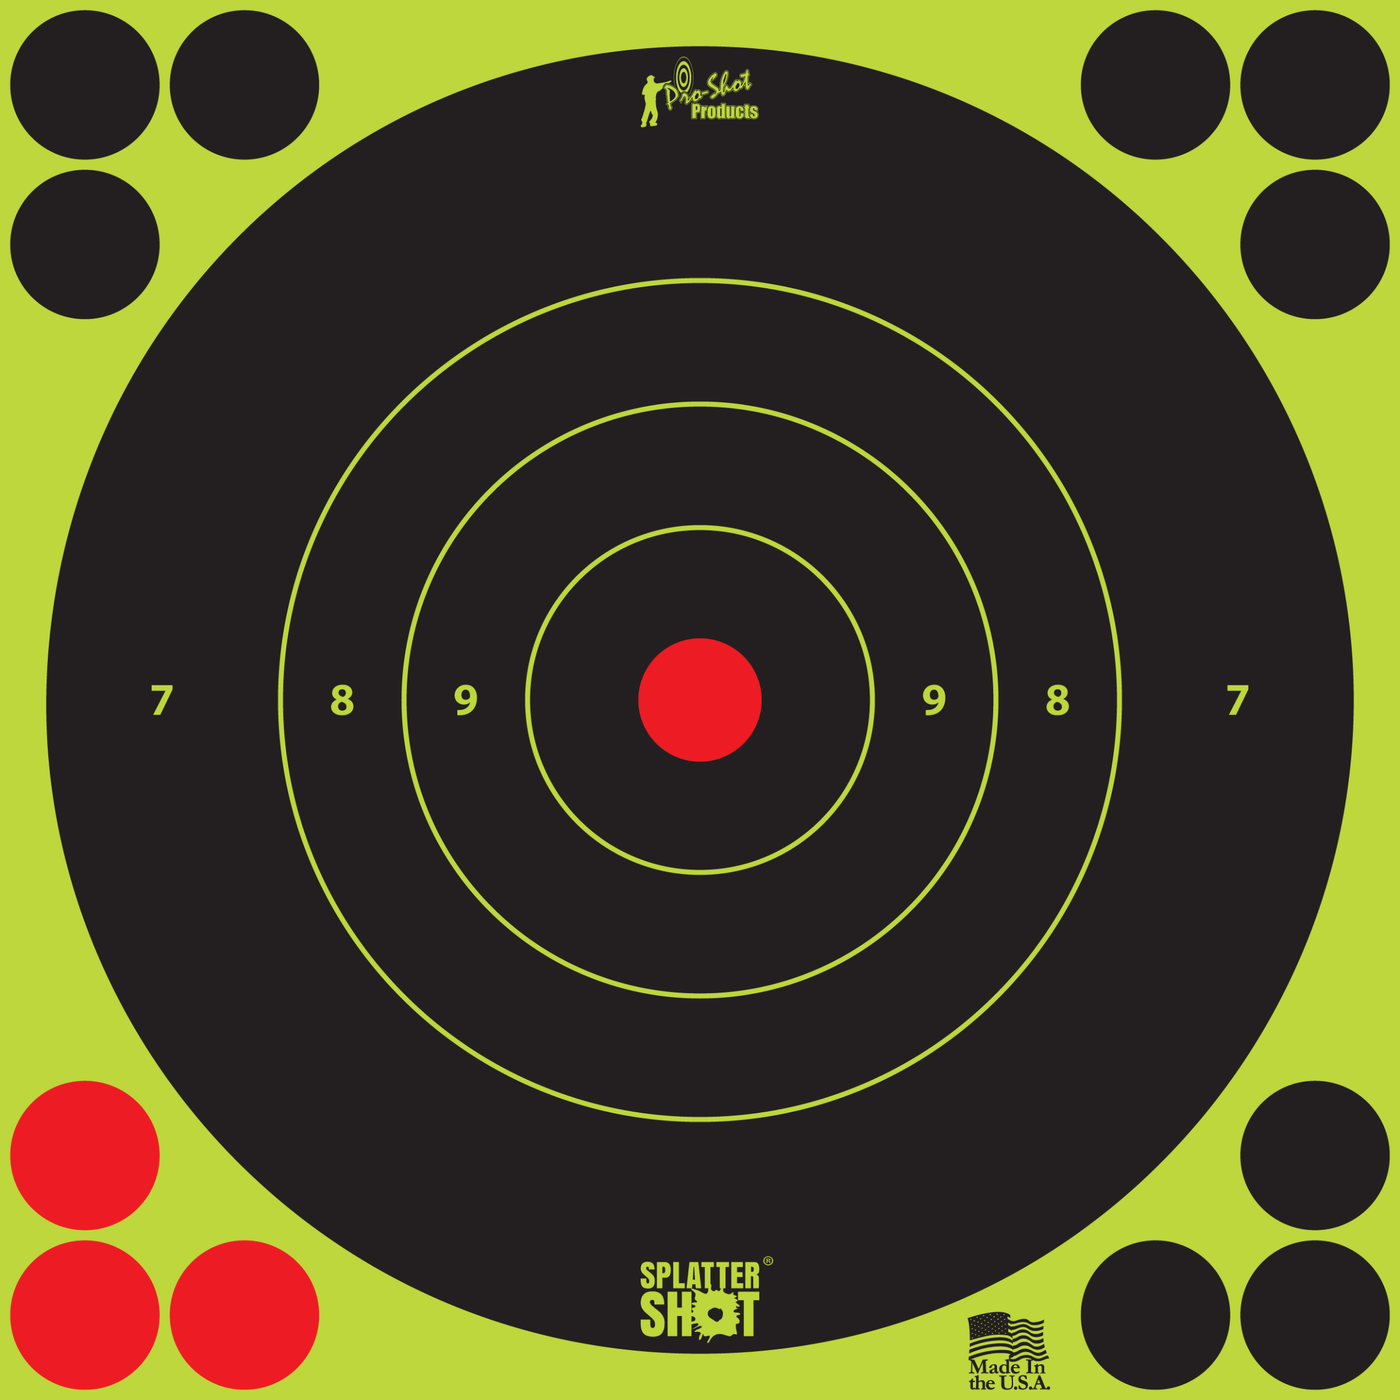 Pro-Shot Pro-shot Splattershot, Proshot 8b-green-6pk  8" Splattershot Bullseye Trg Shooting